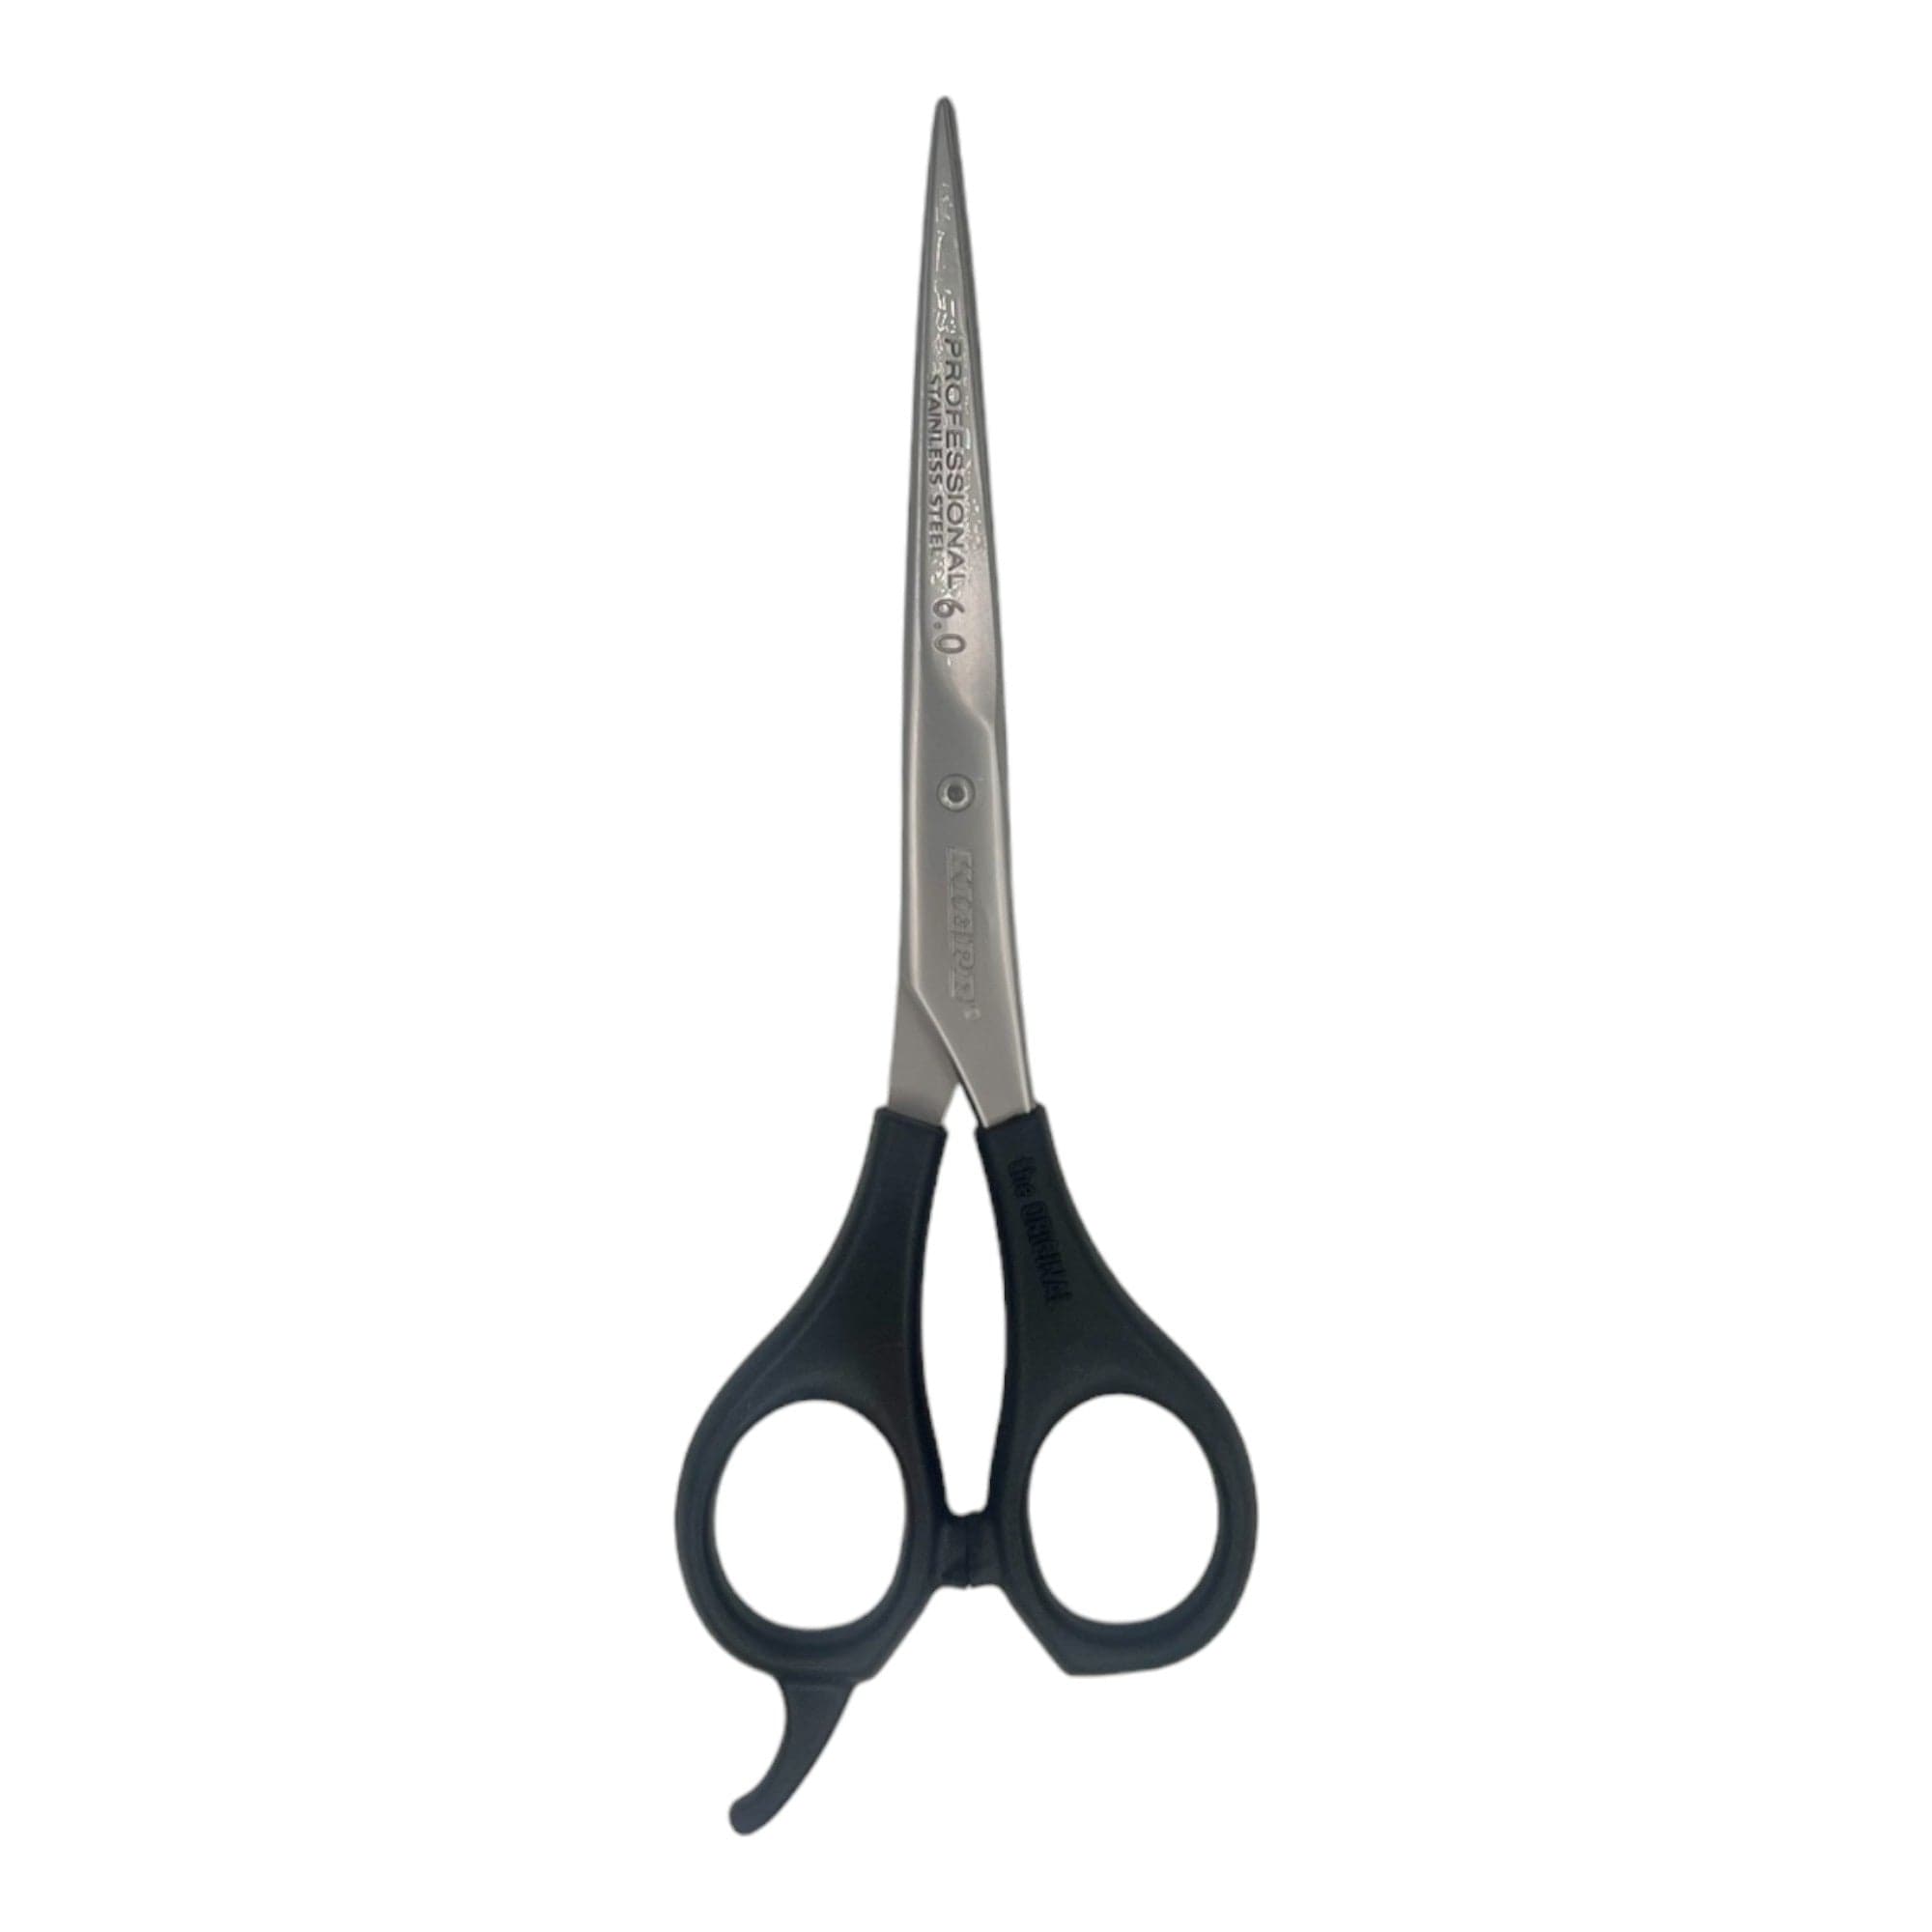 Kiepe - 2118 Academy Series Scissors 6 Inch (16cm)